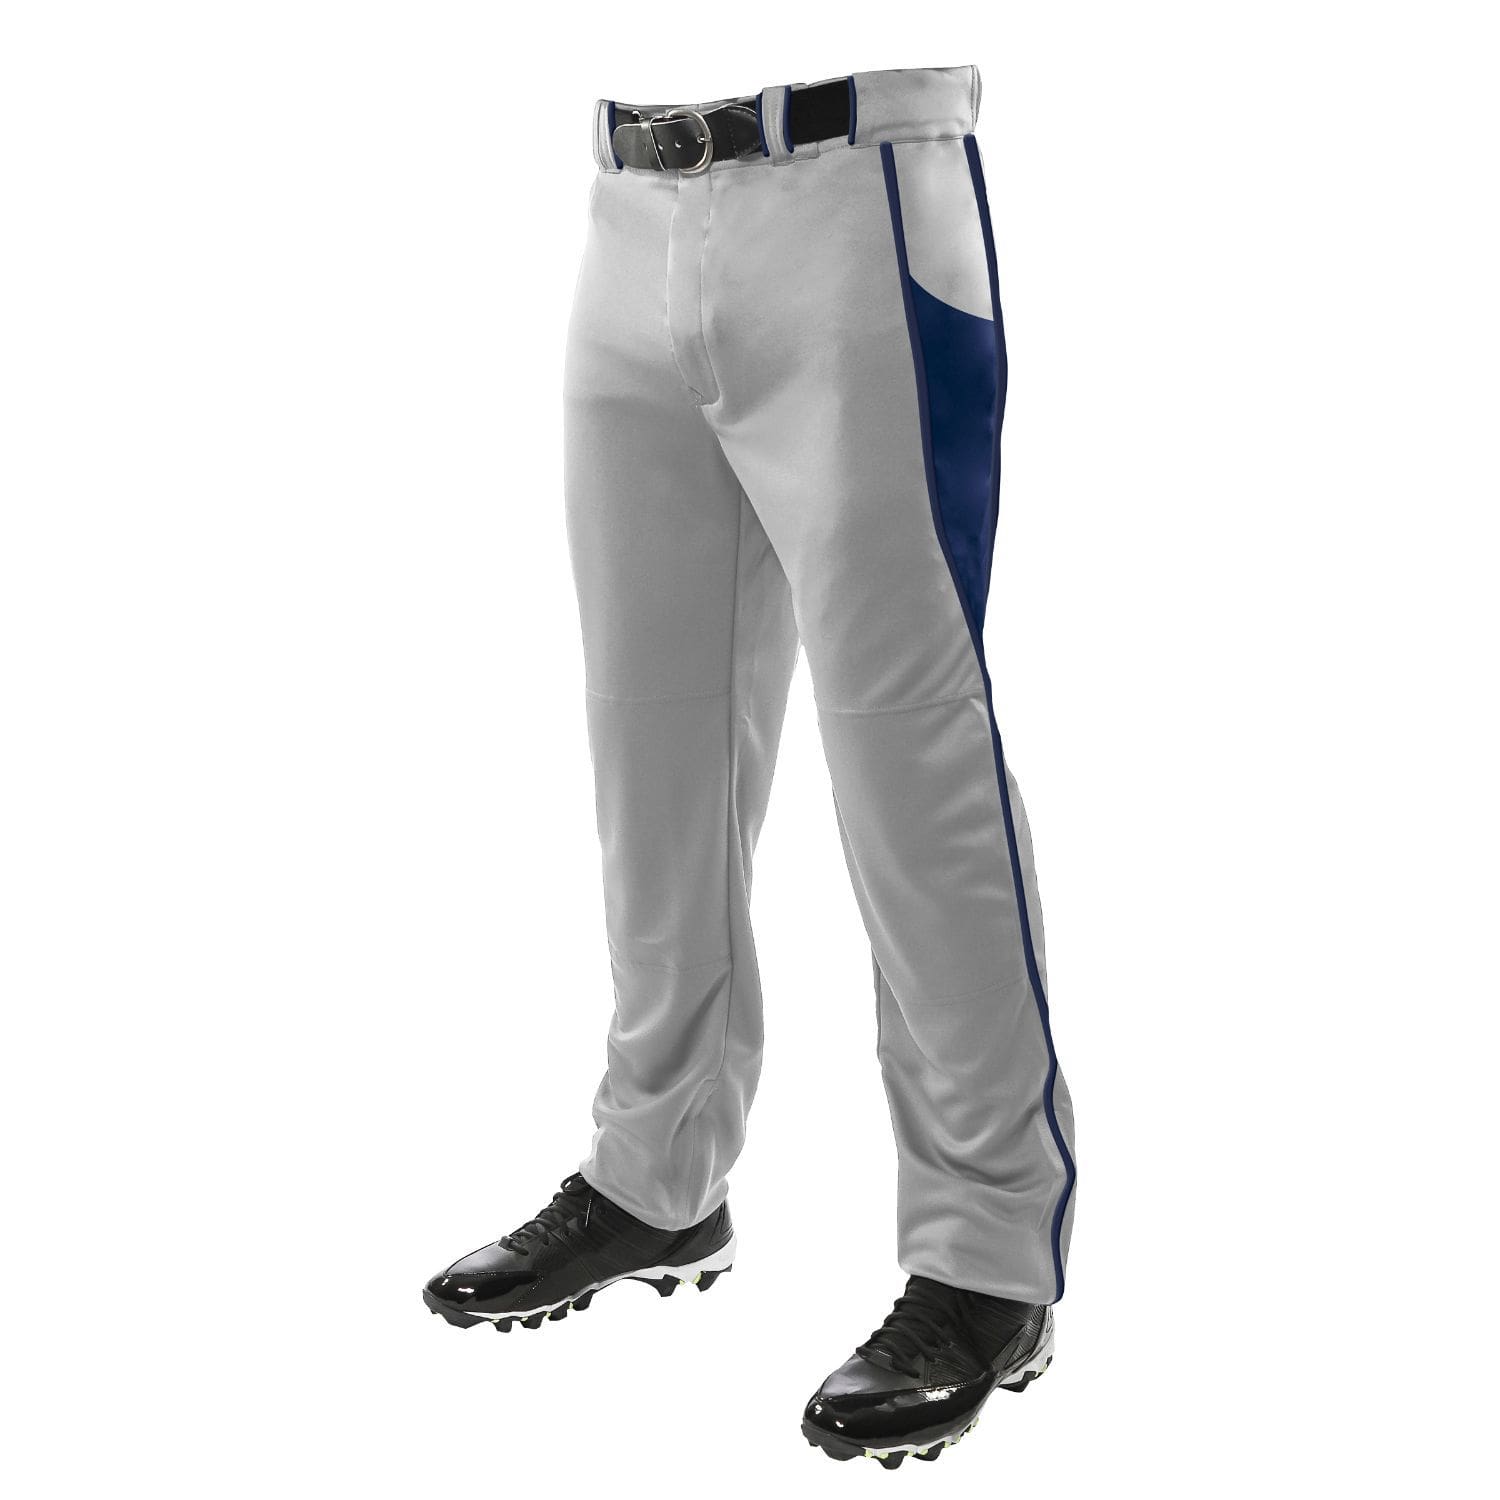 Champro Sports : Baseball Champro Adult Triple Crown Baseball Pant Grey Navy Medium